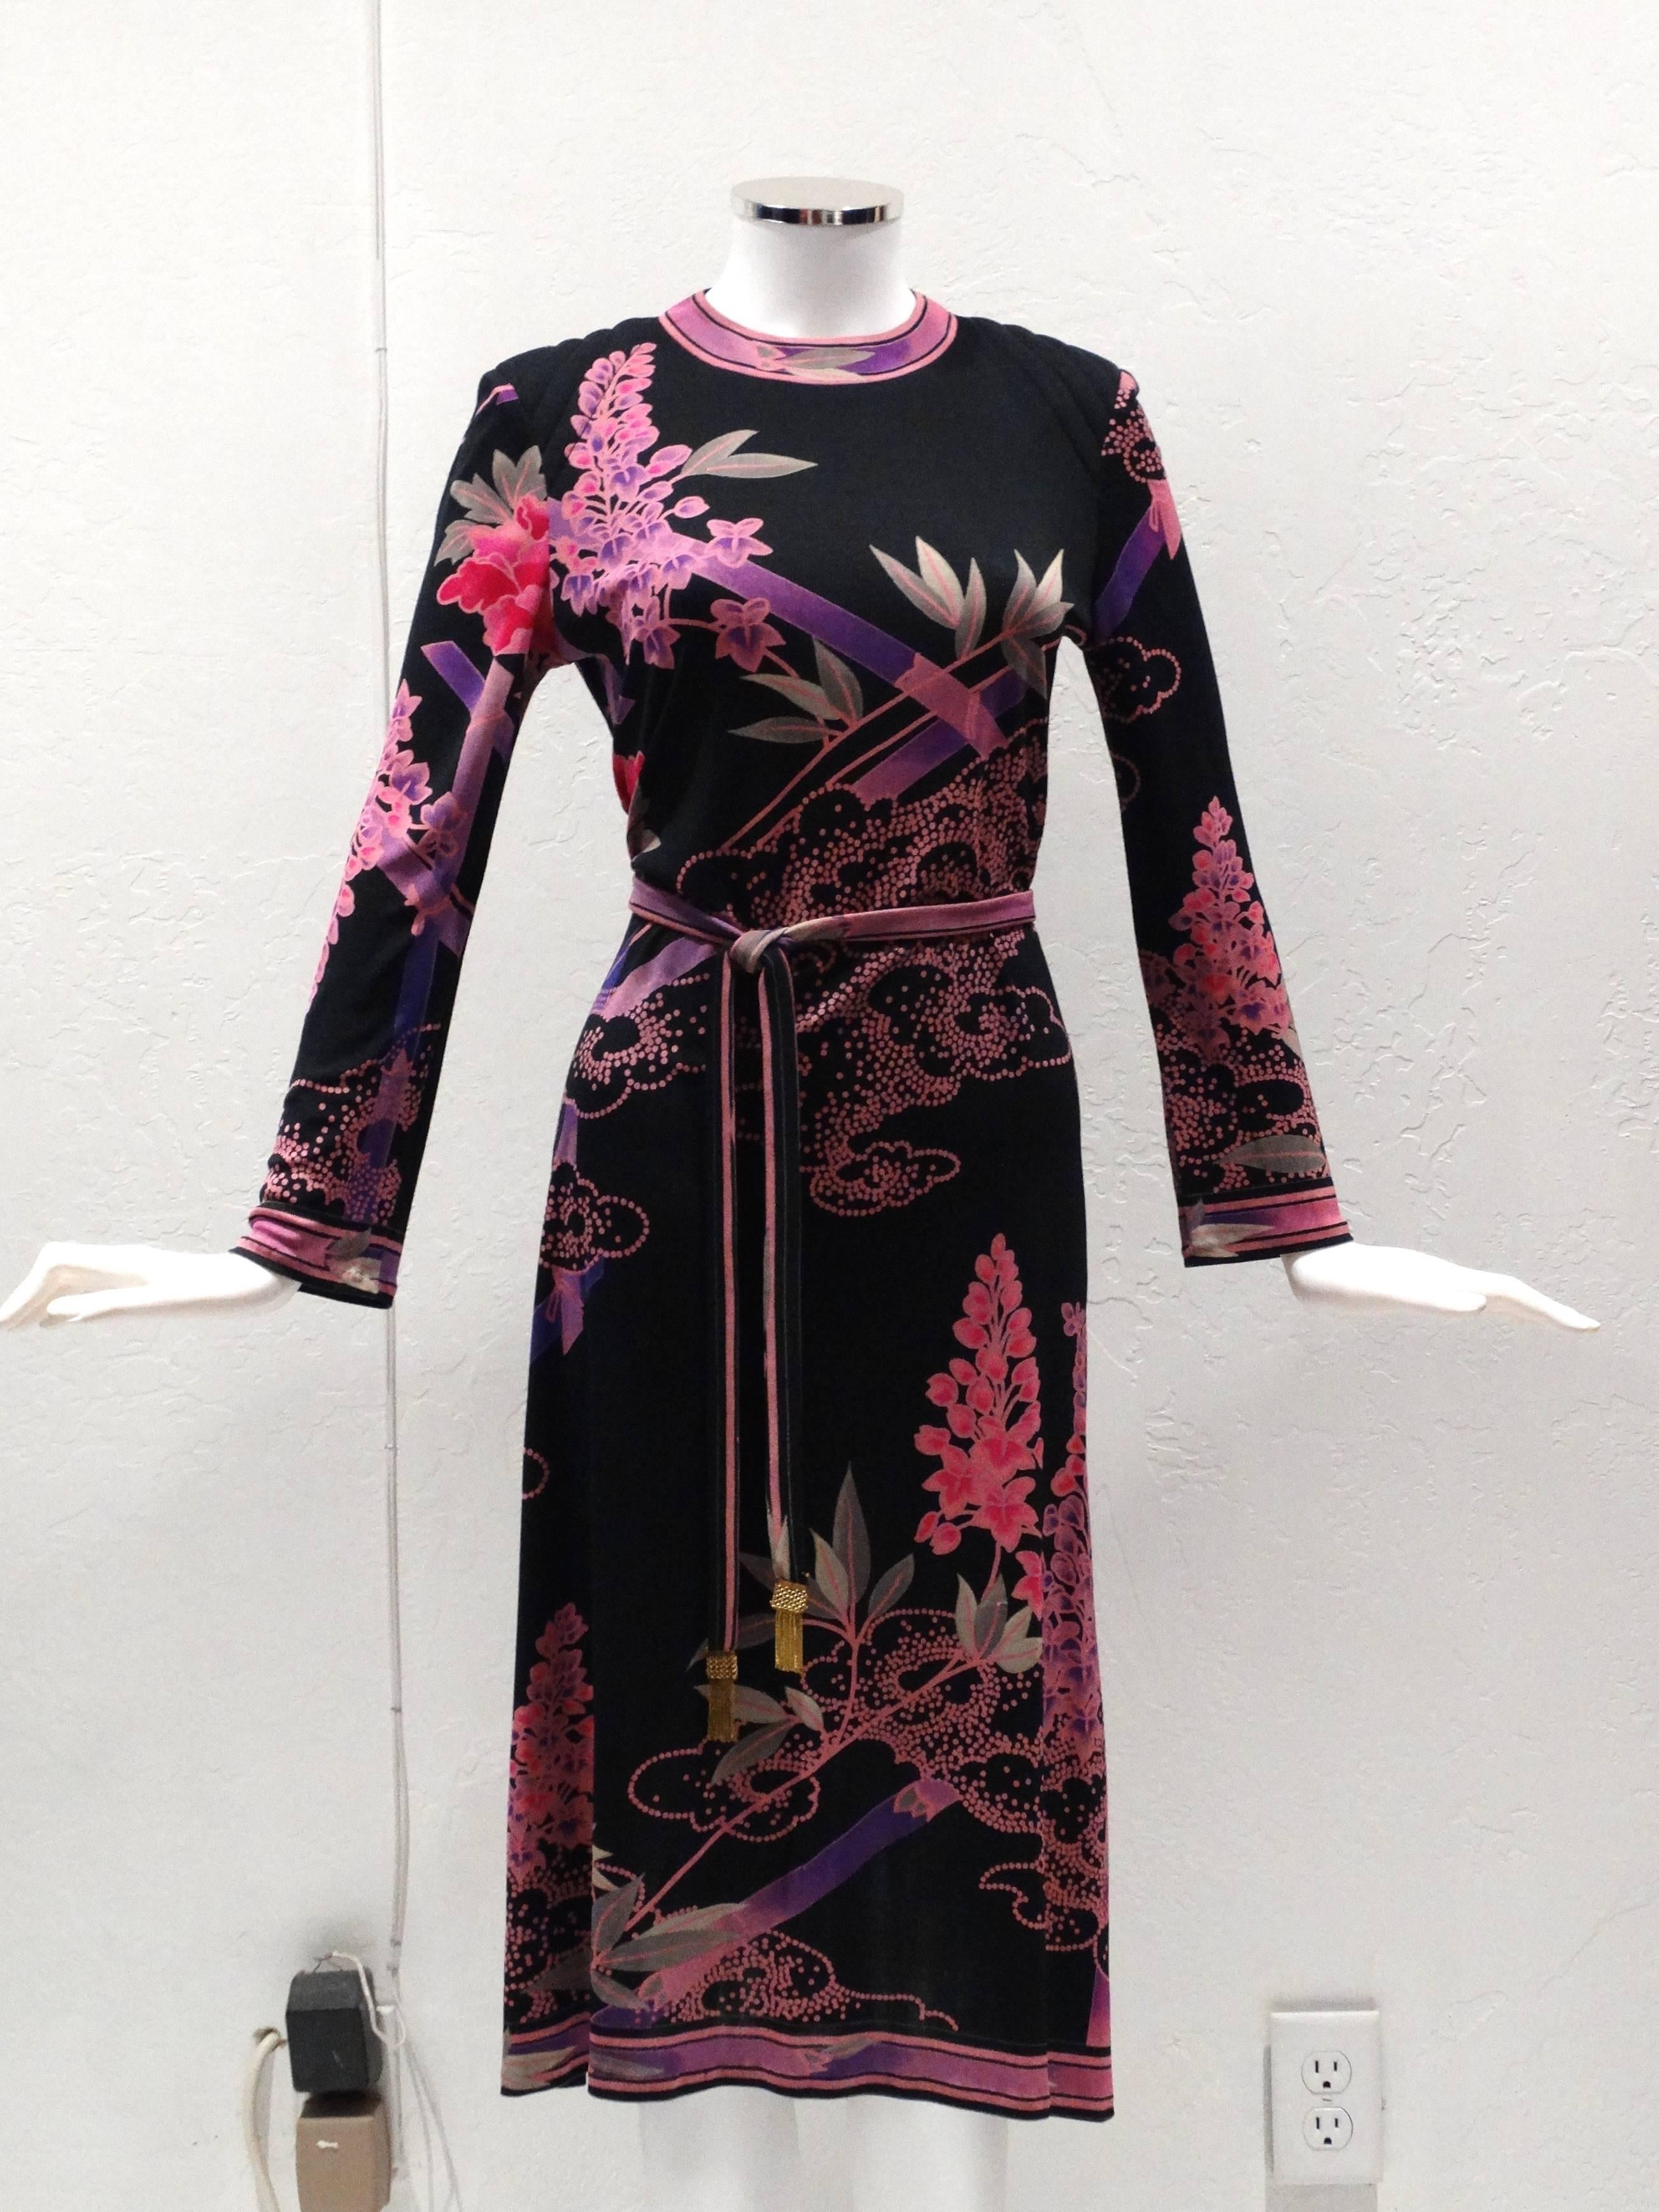 Women's 1970s Leonard Paris Silk Jersey Dress with Tassle Belt